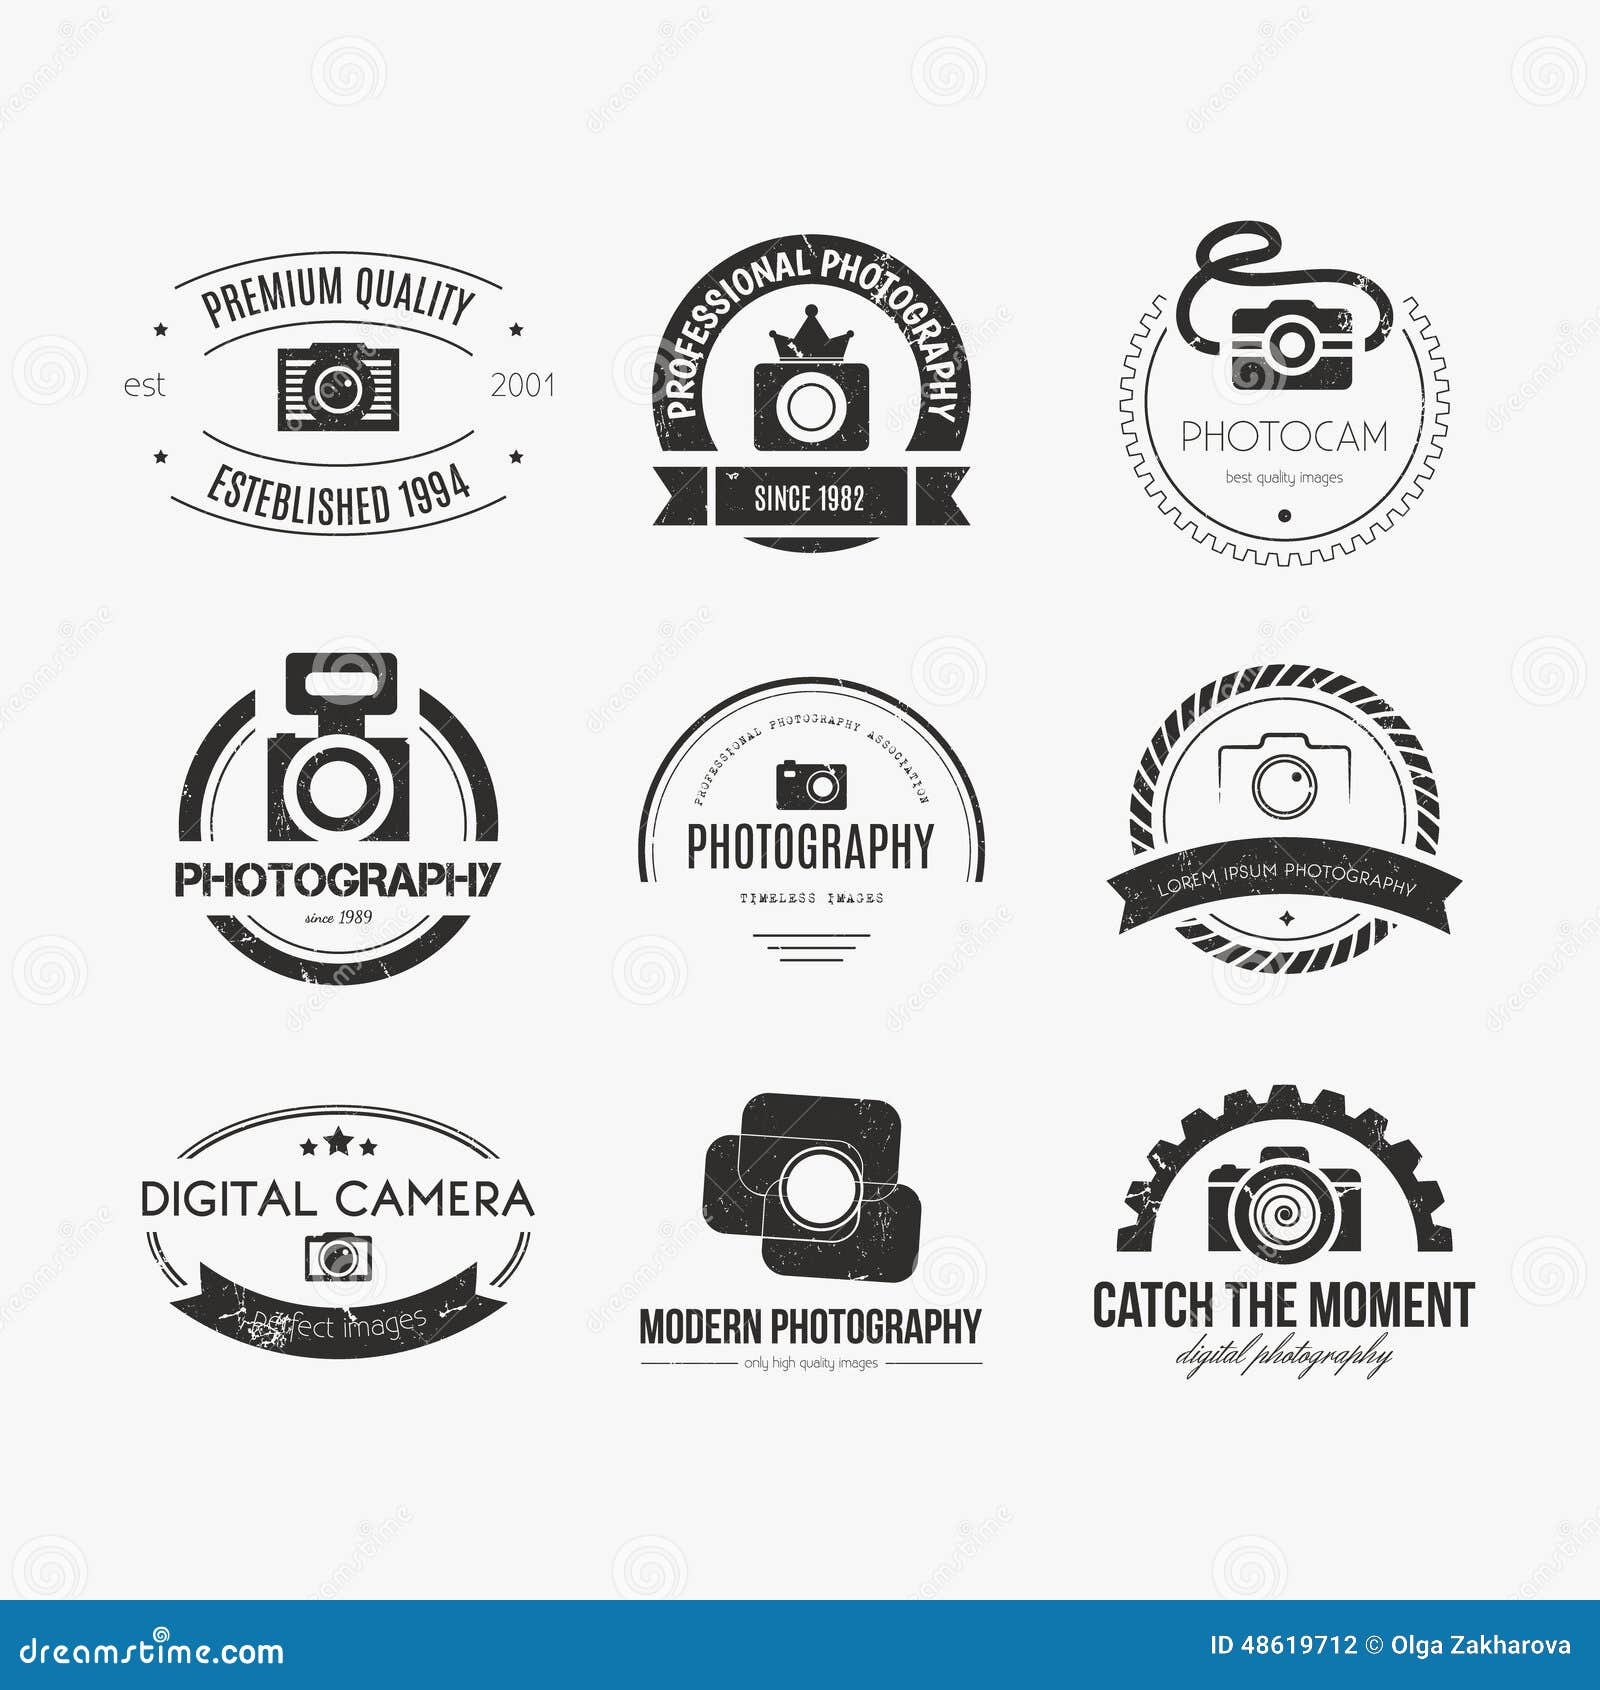 photography logos